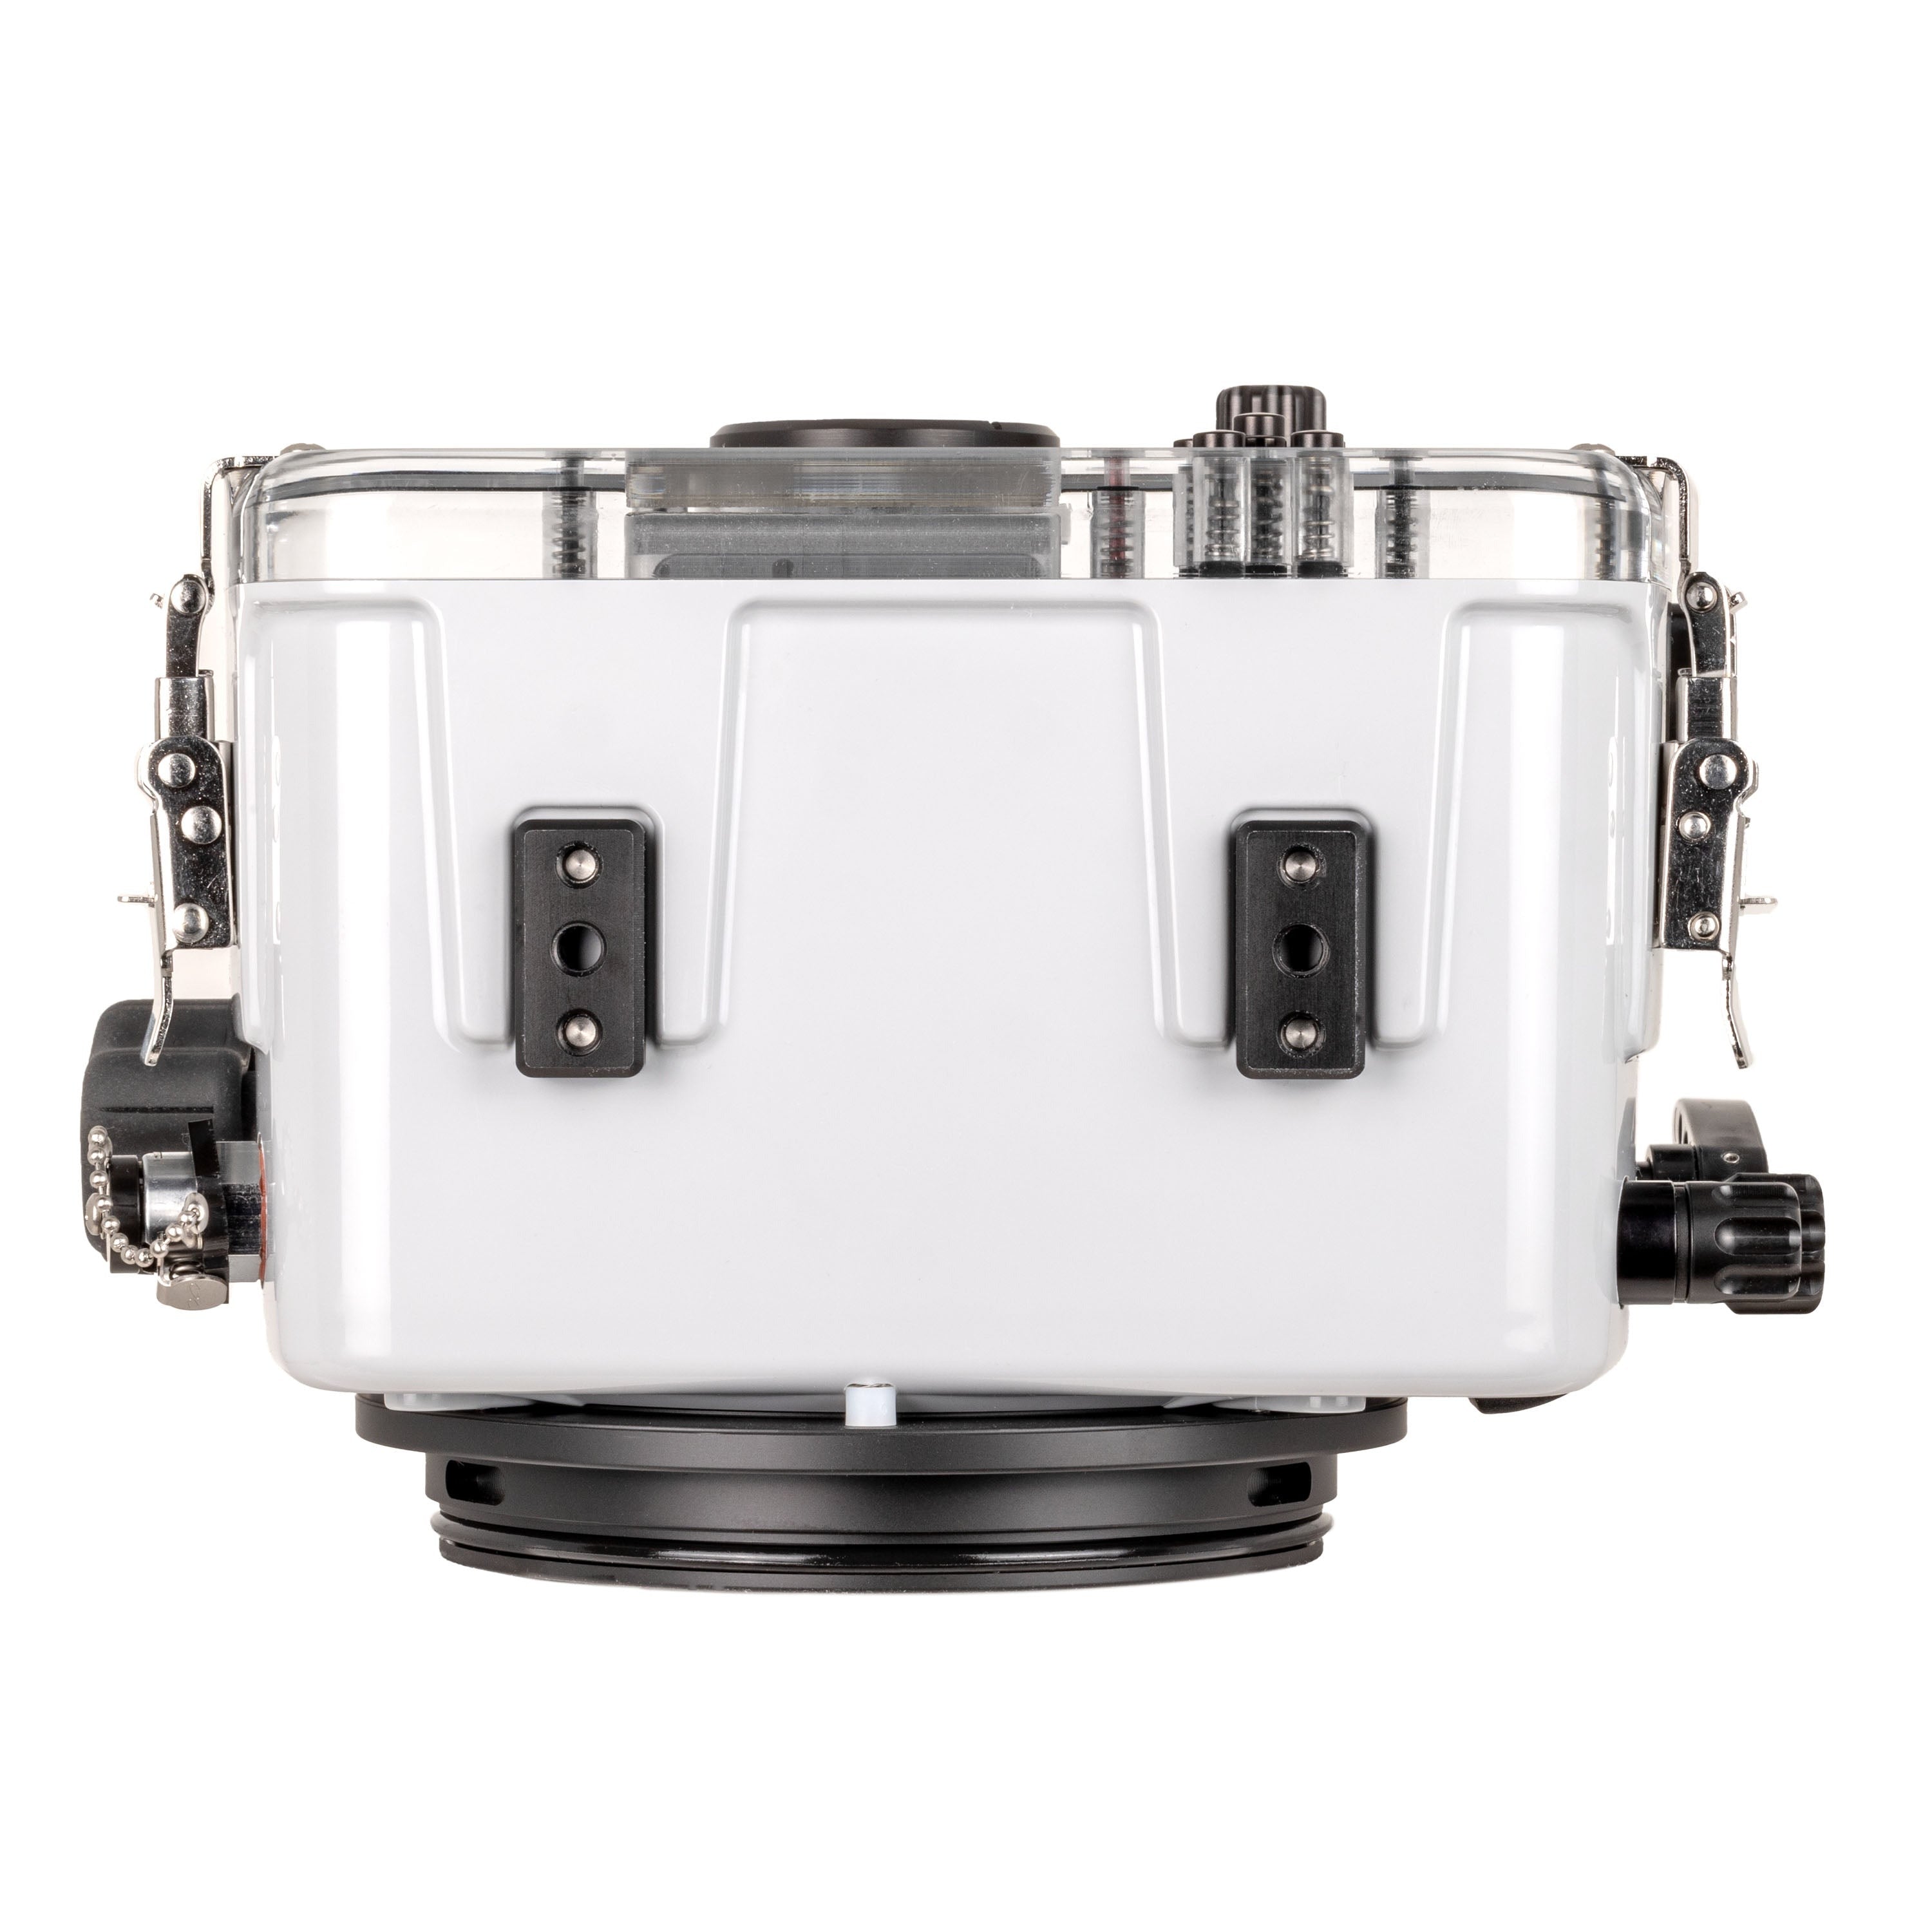 Ikelite 200DL Underwater Housing for Sony a9 III Mirrorless Digital Cameras